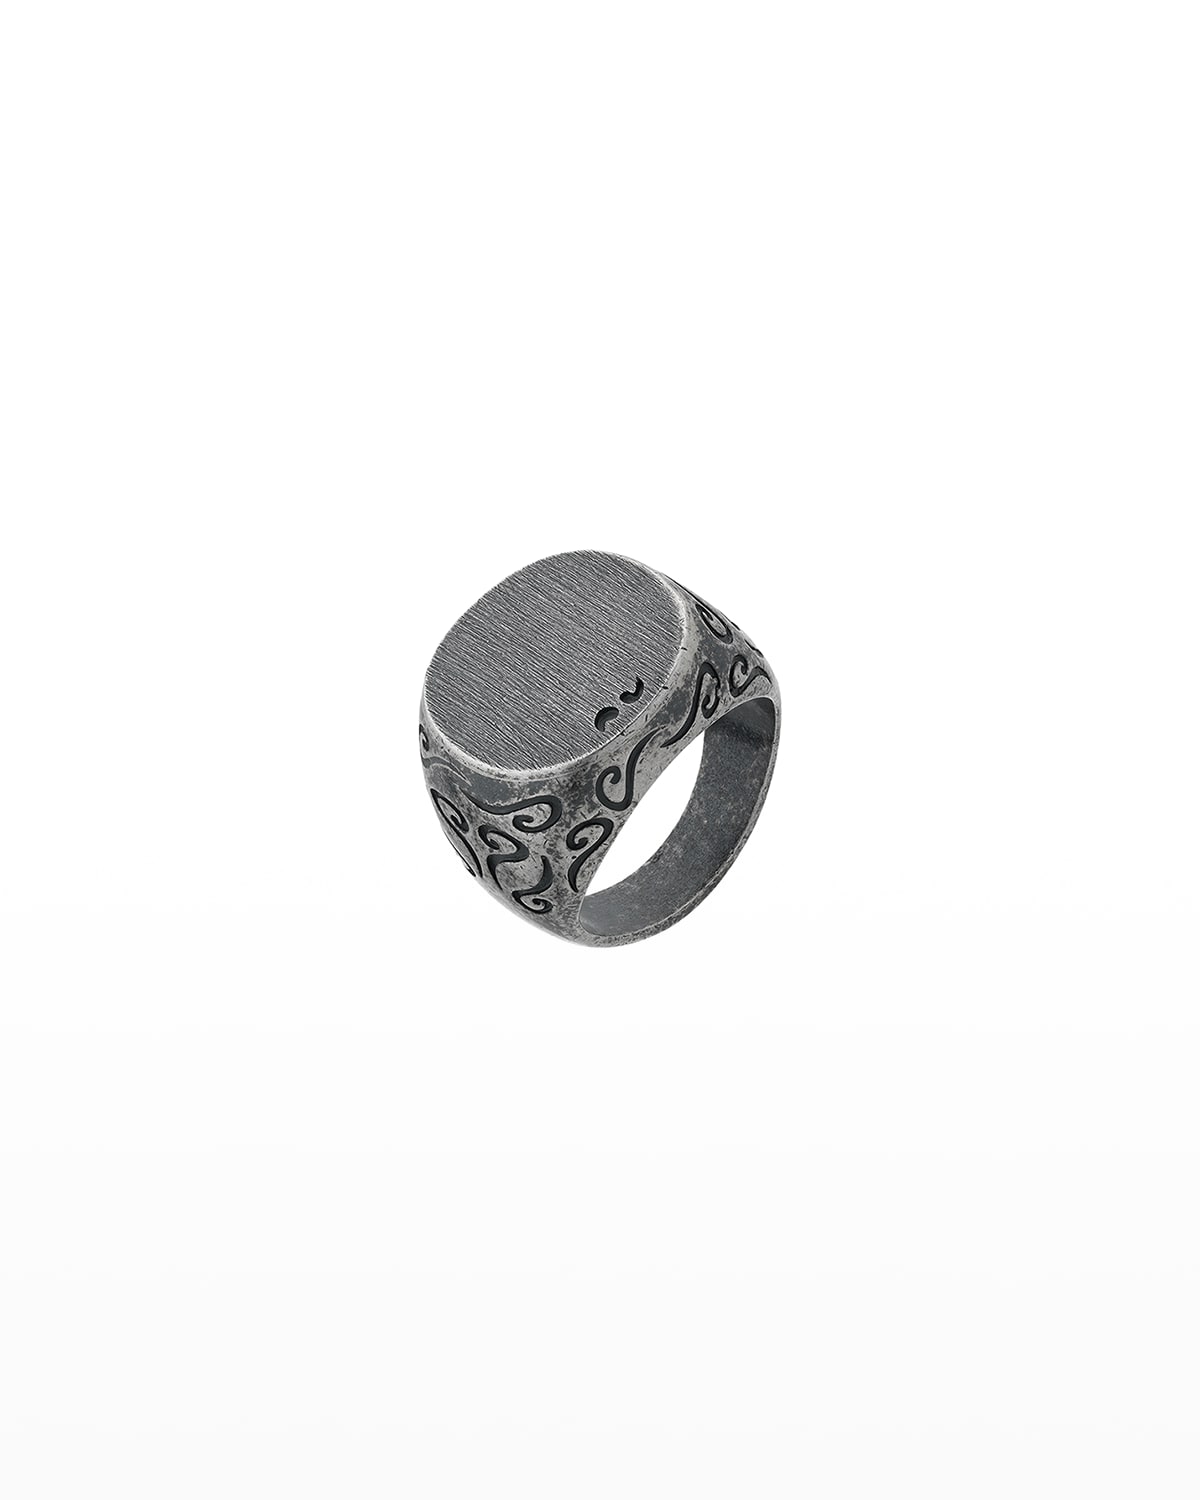 Marco Dal Maso Oxidized Silver Ring, Size 10